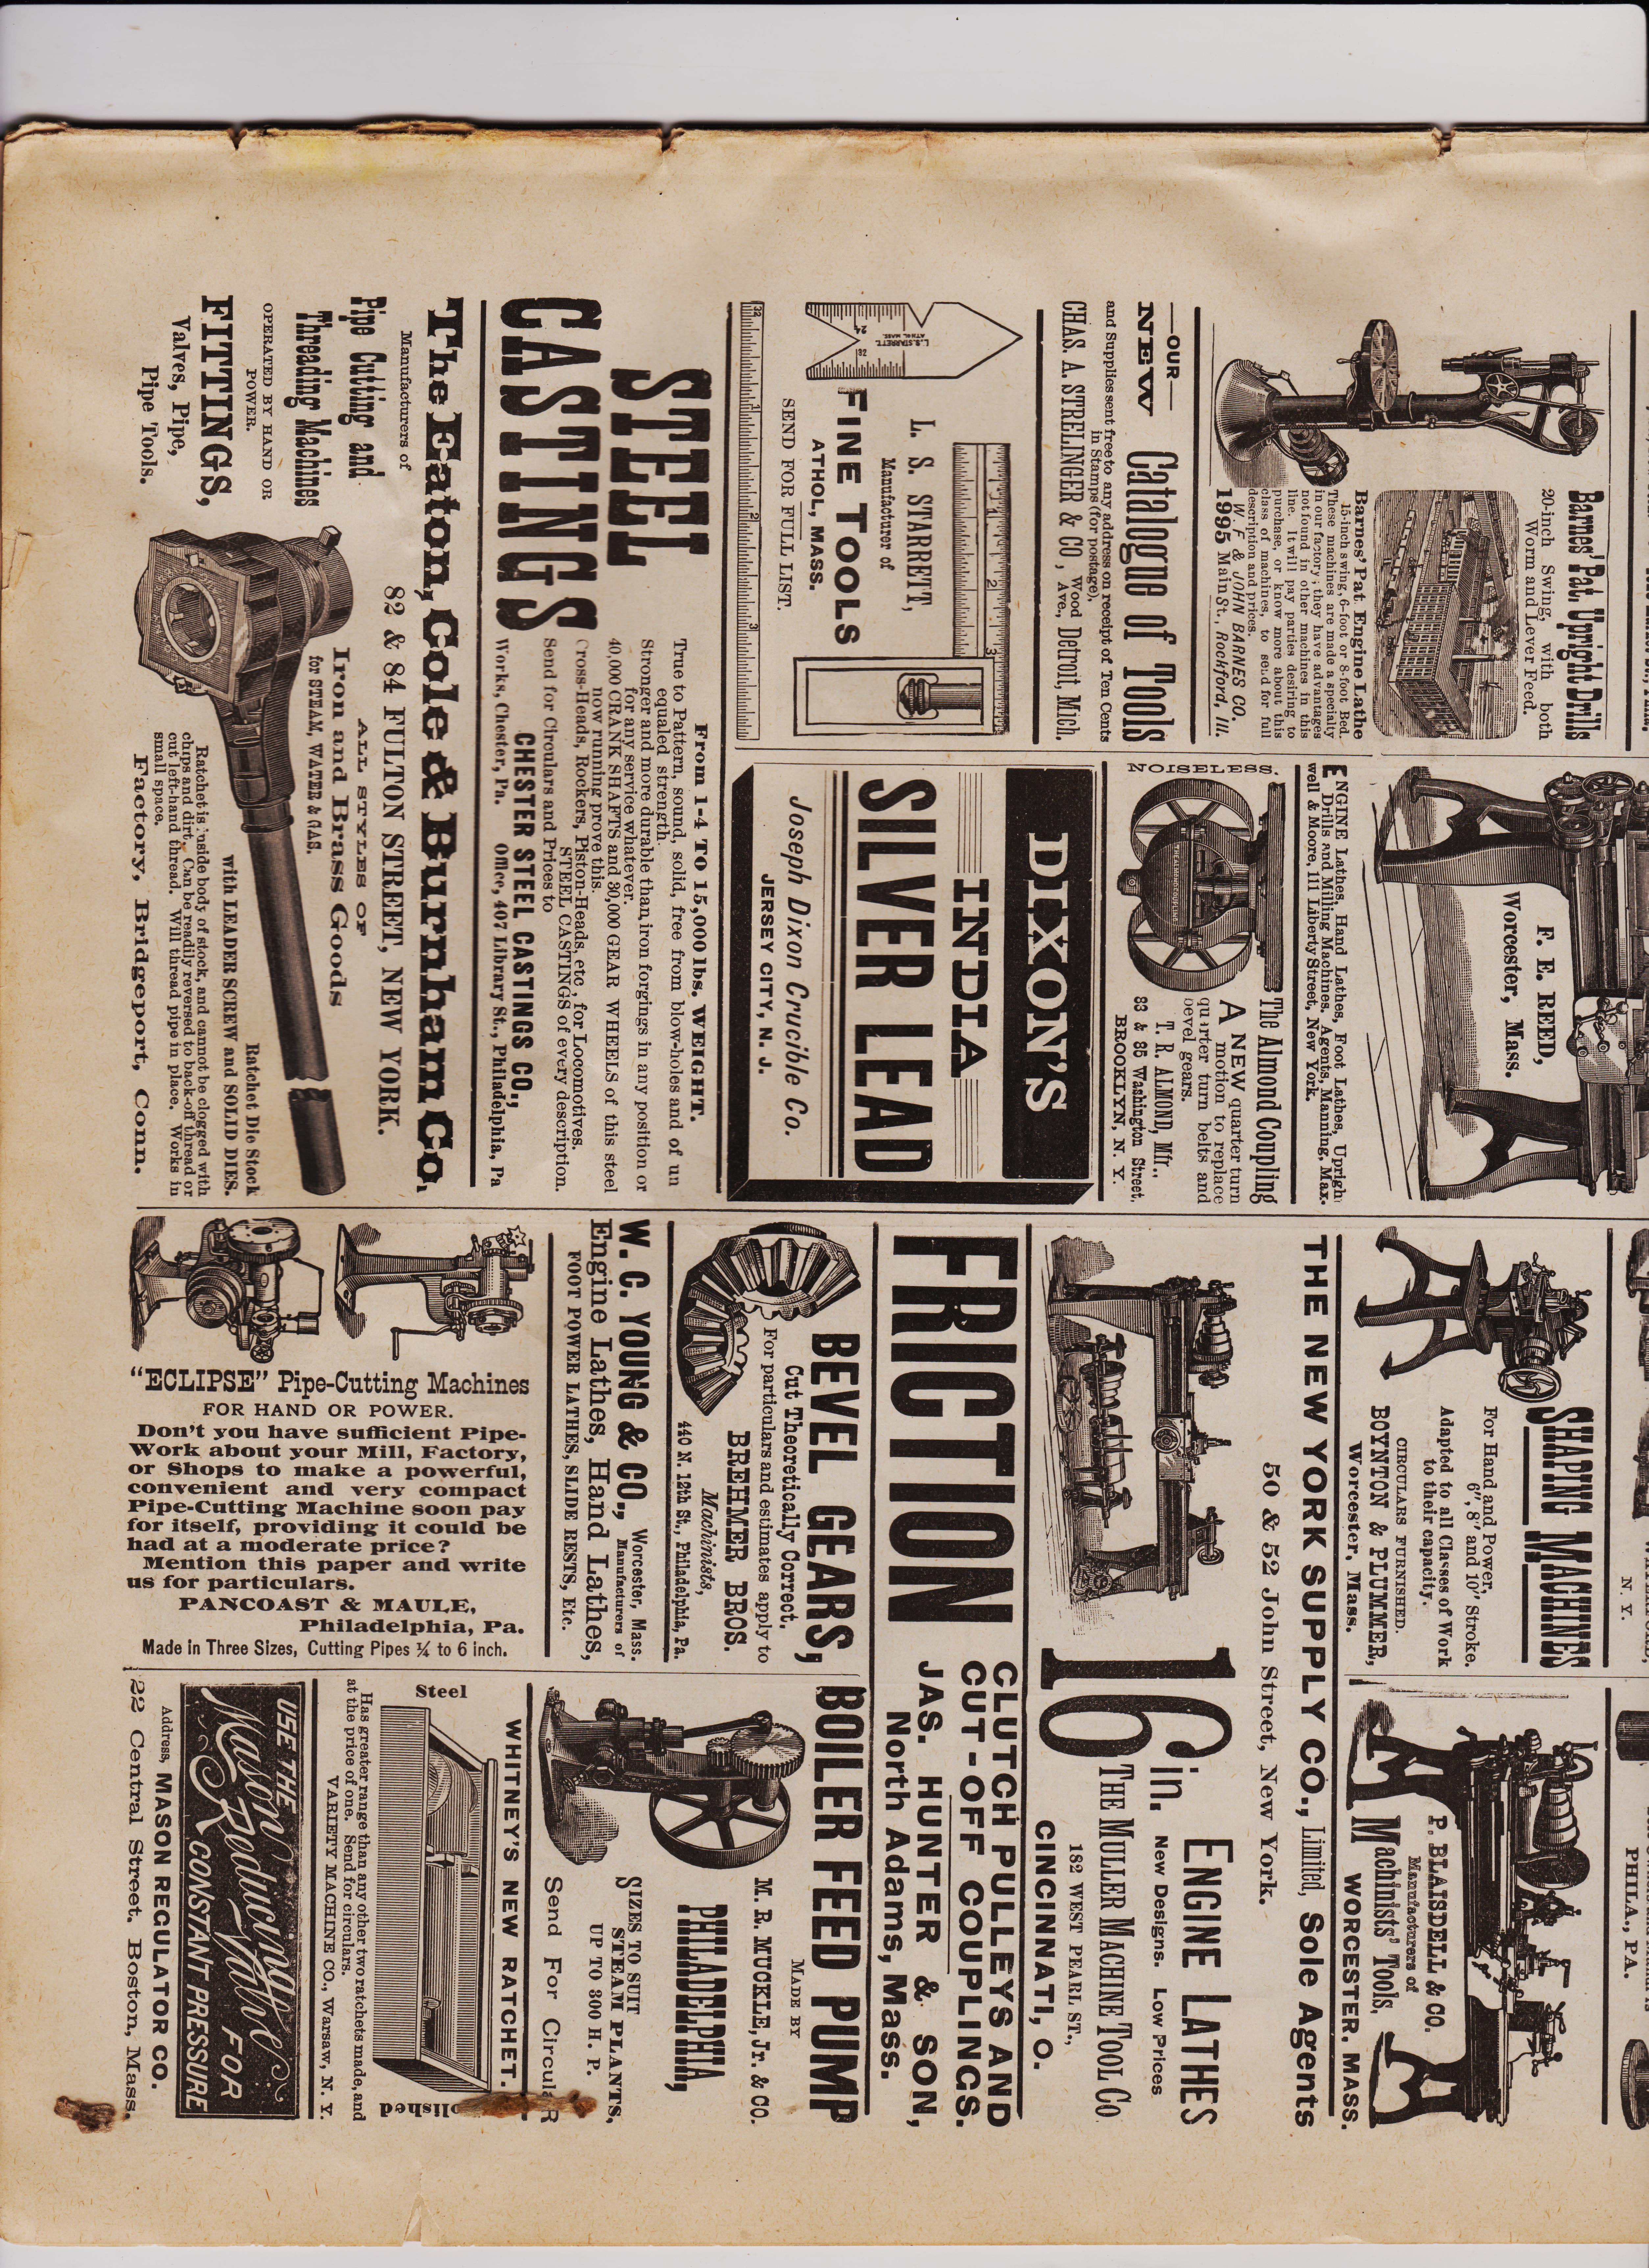 https://antiquemachinery.com/images-American-Machinist-Jan-15-1887/American-Machinist-Jan-15-1887-pg-13-bot-F-E-Reed-lathe-Muller-Machine-Co-Eaton-Cole-Burnham-Co-W-F-John-Barns-Drill-Press-Boyton-and-Plummer-Hand-Shaper.jpeg